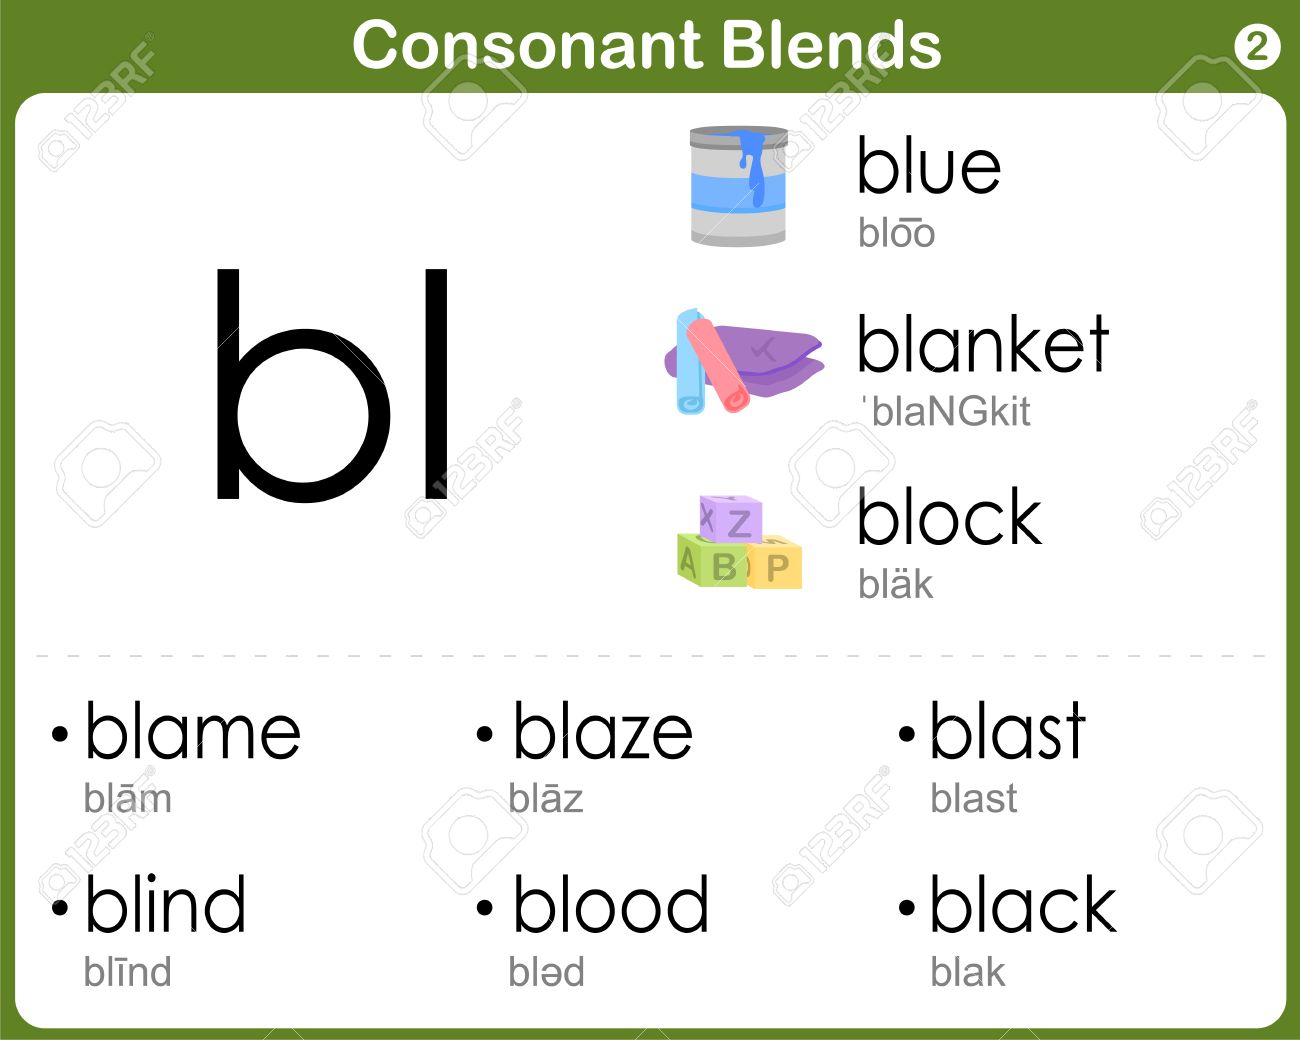 Consonant Blends Worksheet For Kids in Letter Blends Worksheets